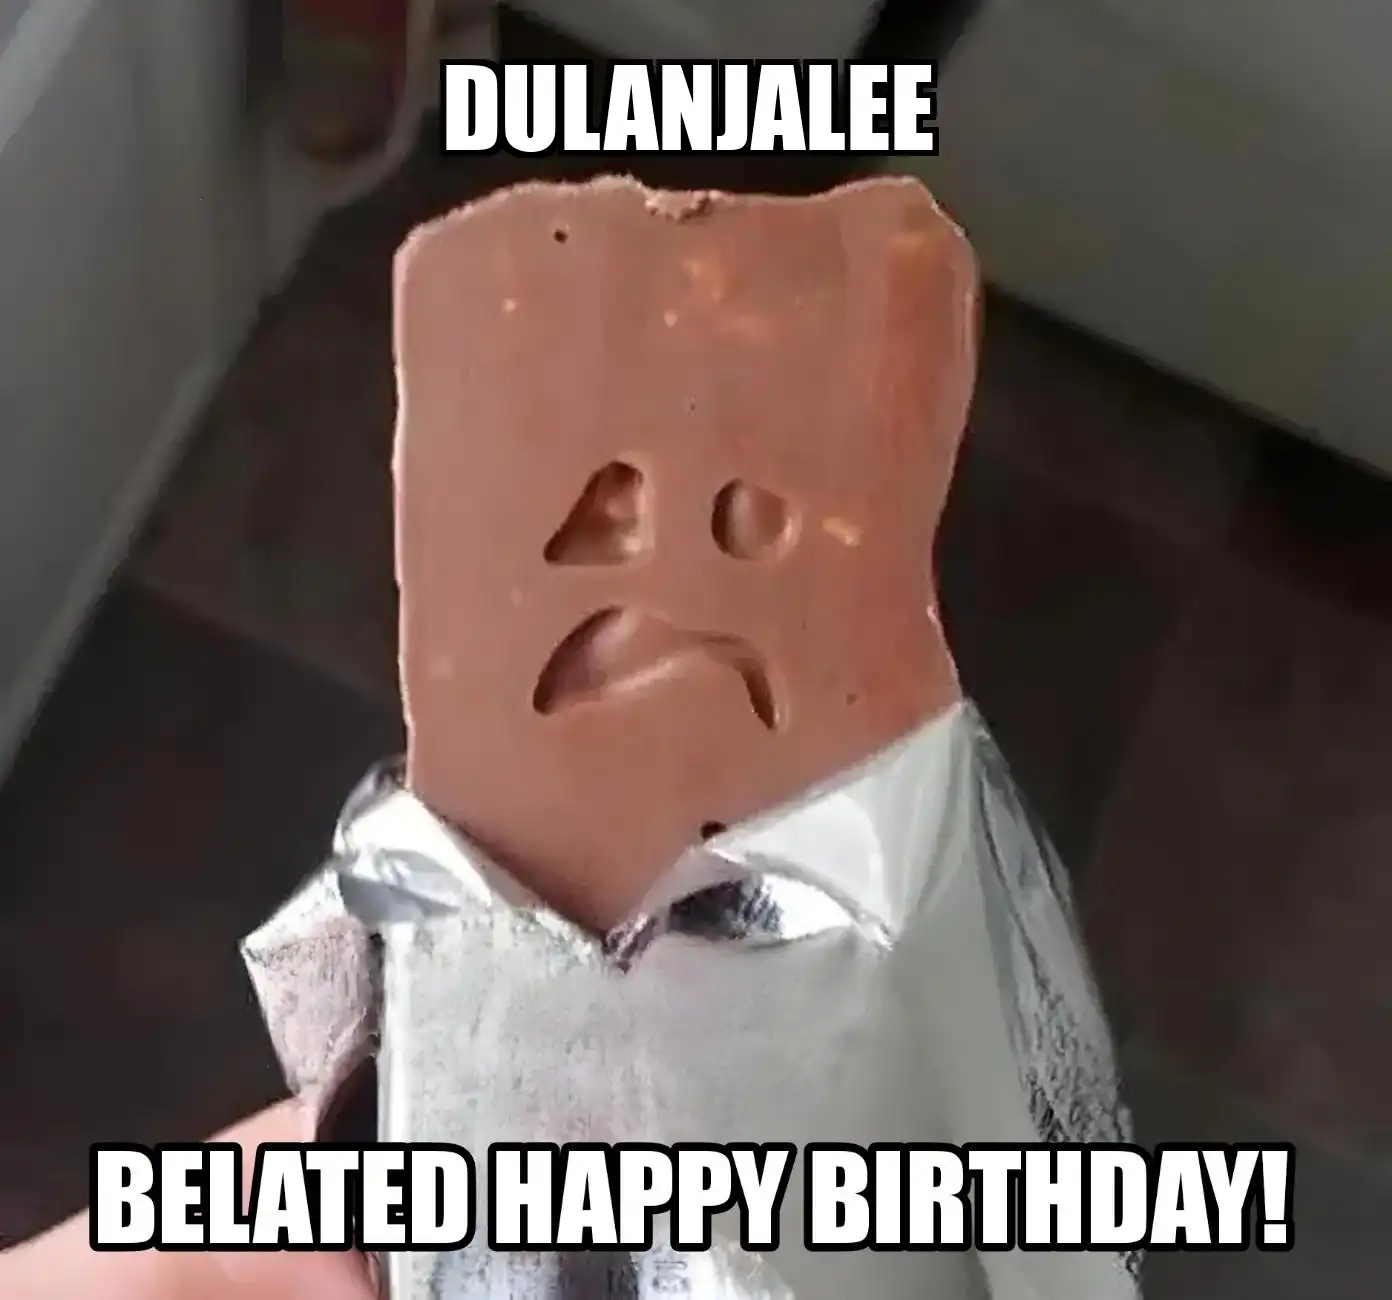 Happy Birthday Dulanjalee Belated Happy Birthday Meme